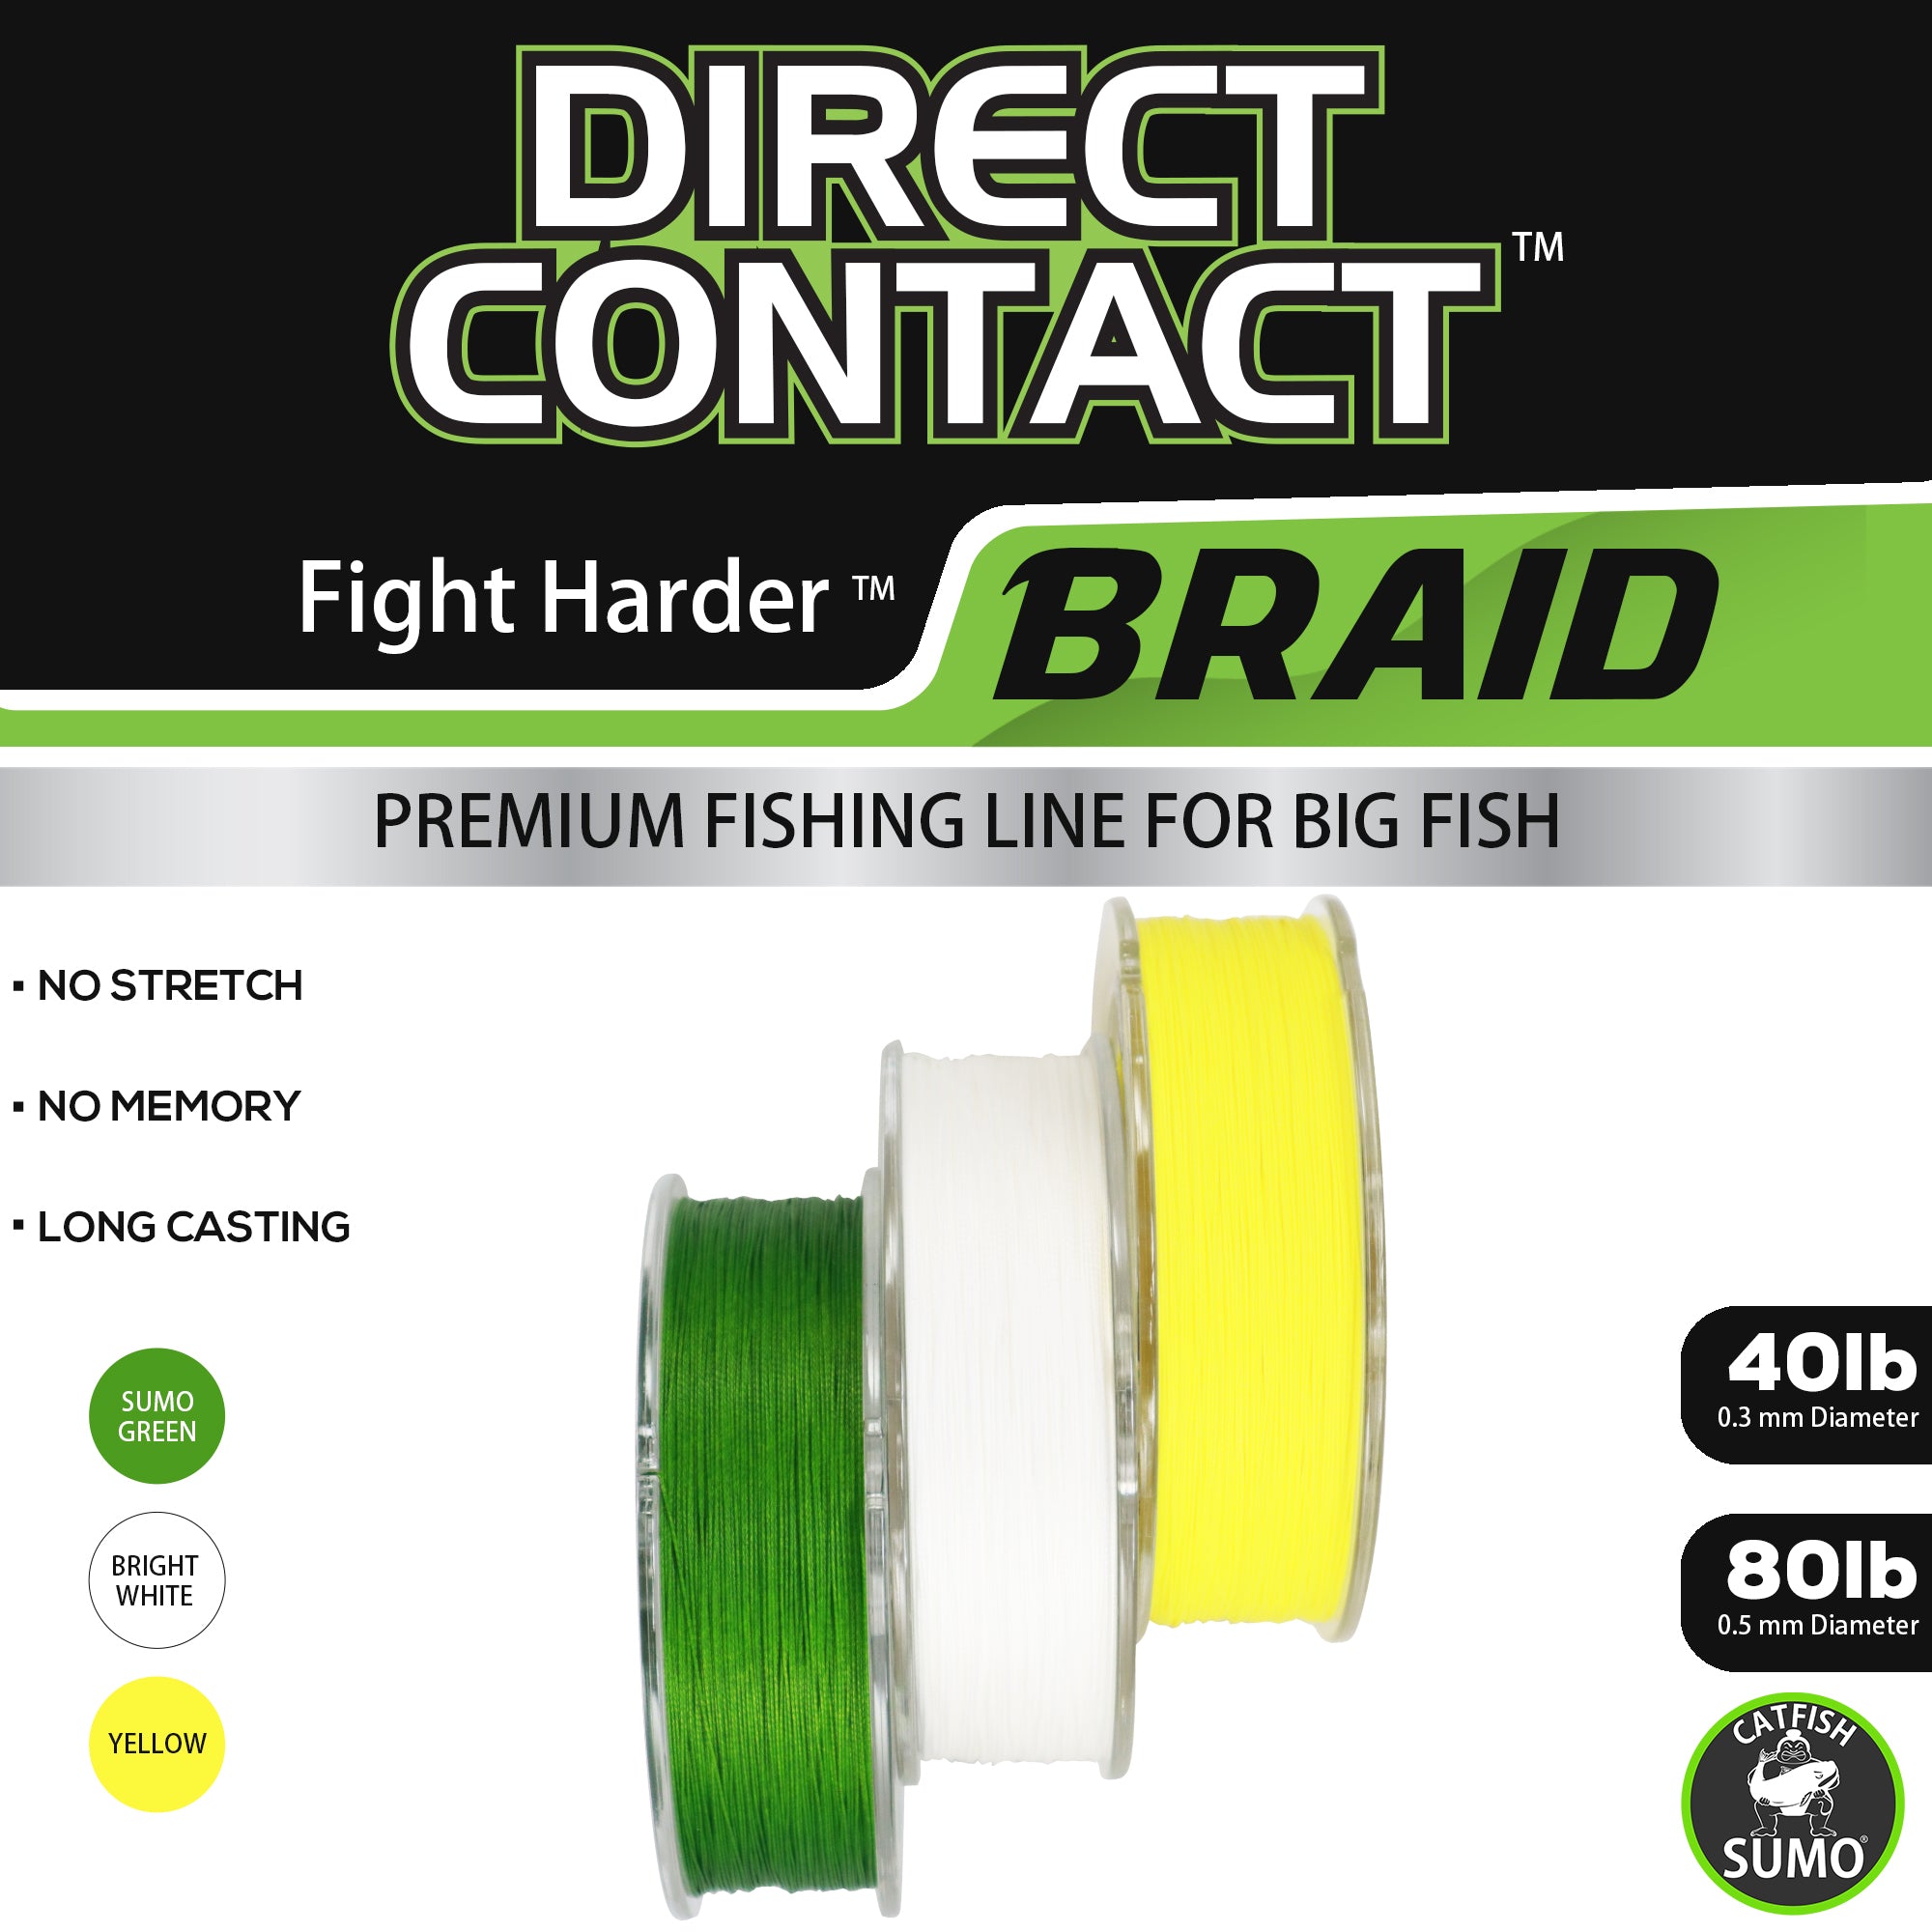 Direct Contact™ Premium Fishing Line for Big Fish, Braid, 300 Yard